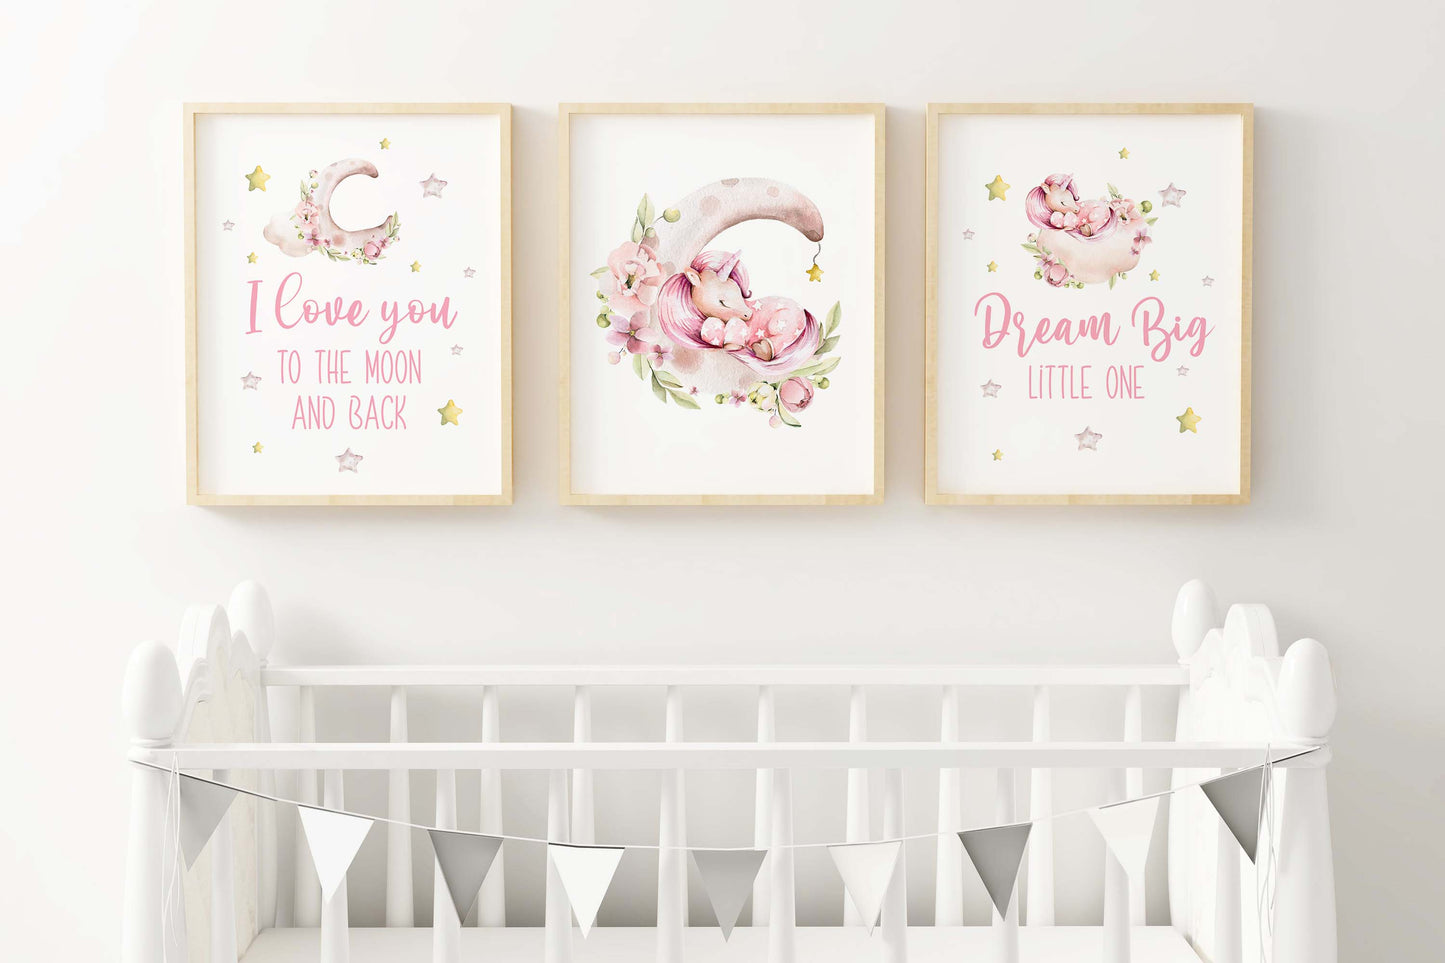 Unicorn Wall Art, Pink unicorn Nursery Prints set of 3 - Magical unicorn